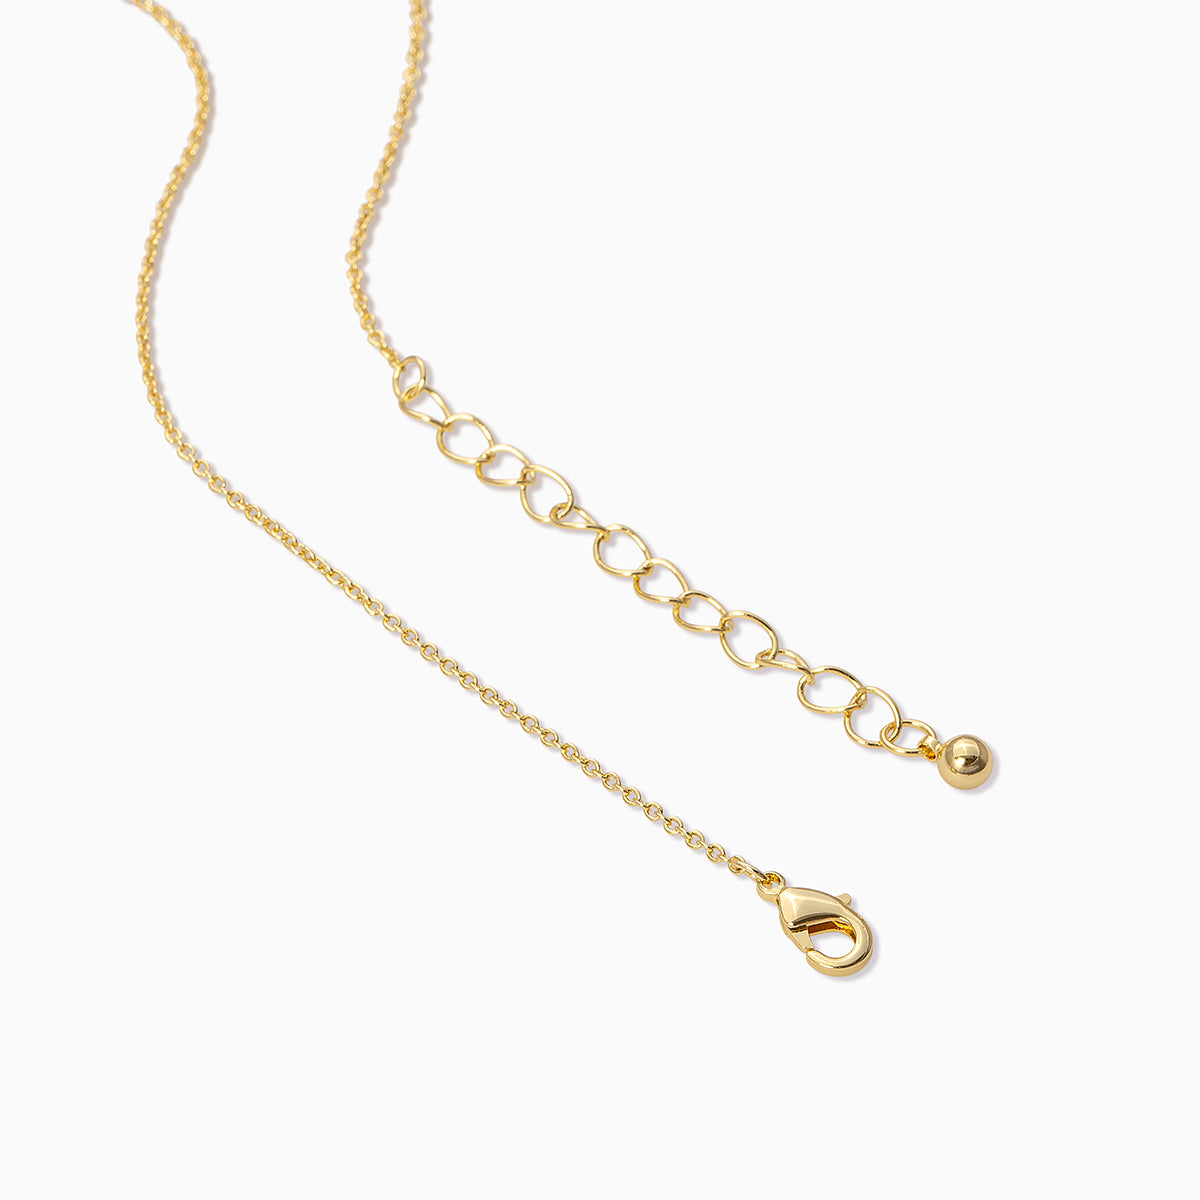 Adjustable Zipper Necklace | Gold | Product Detail Image 3 | Uncommon James